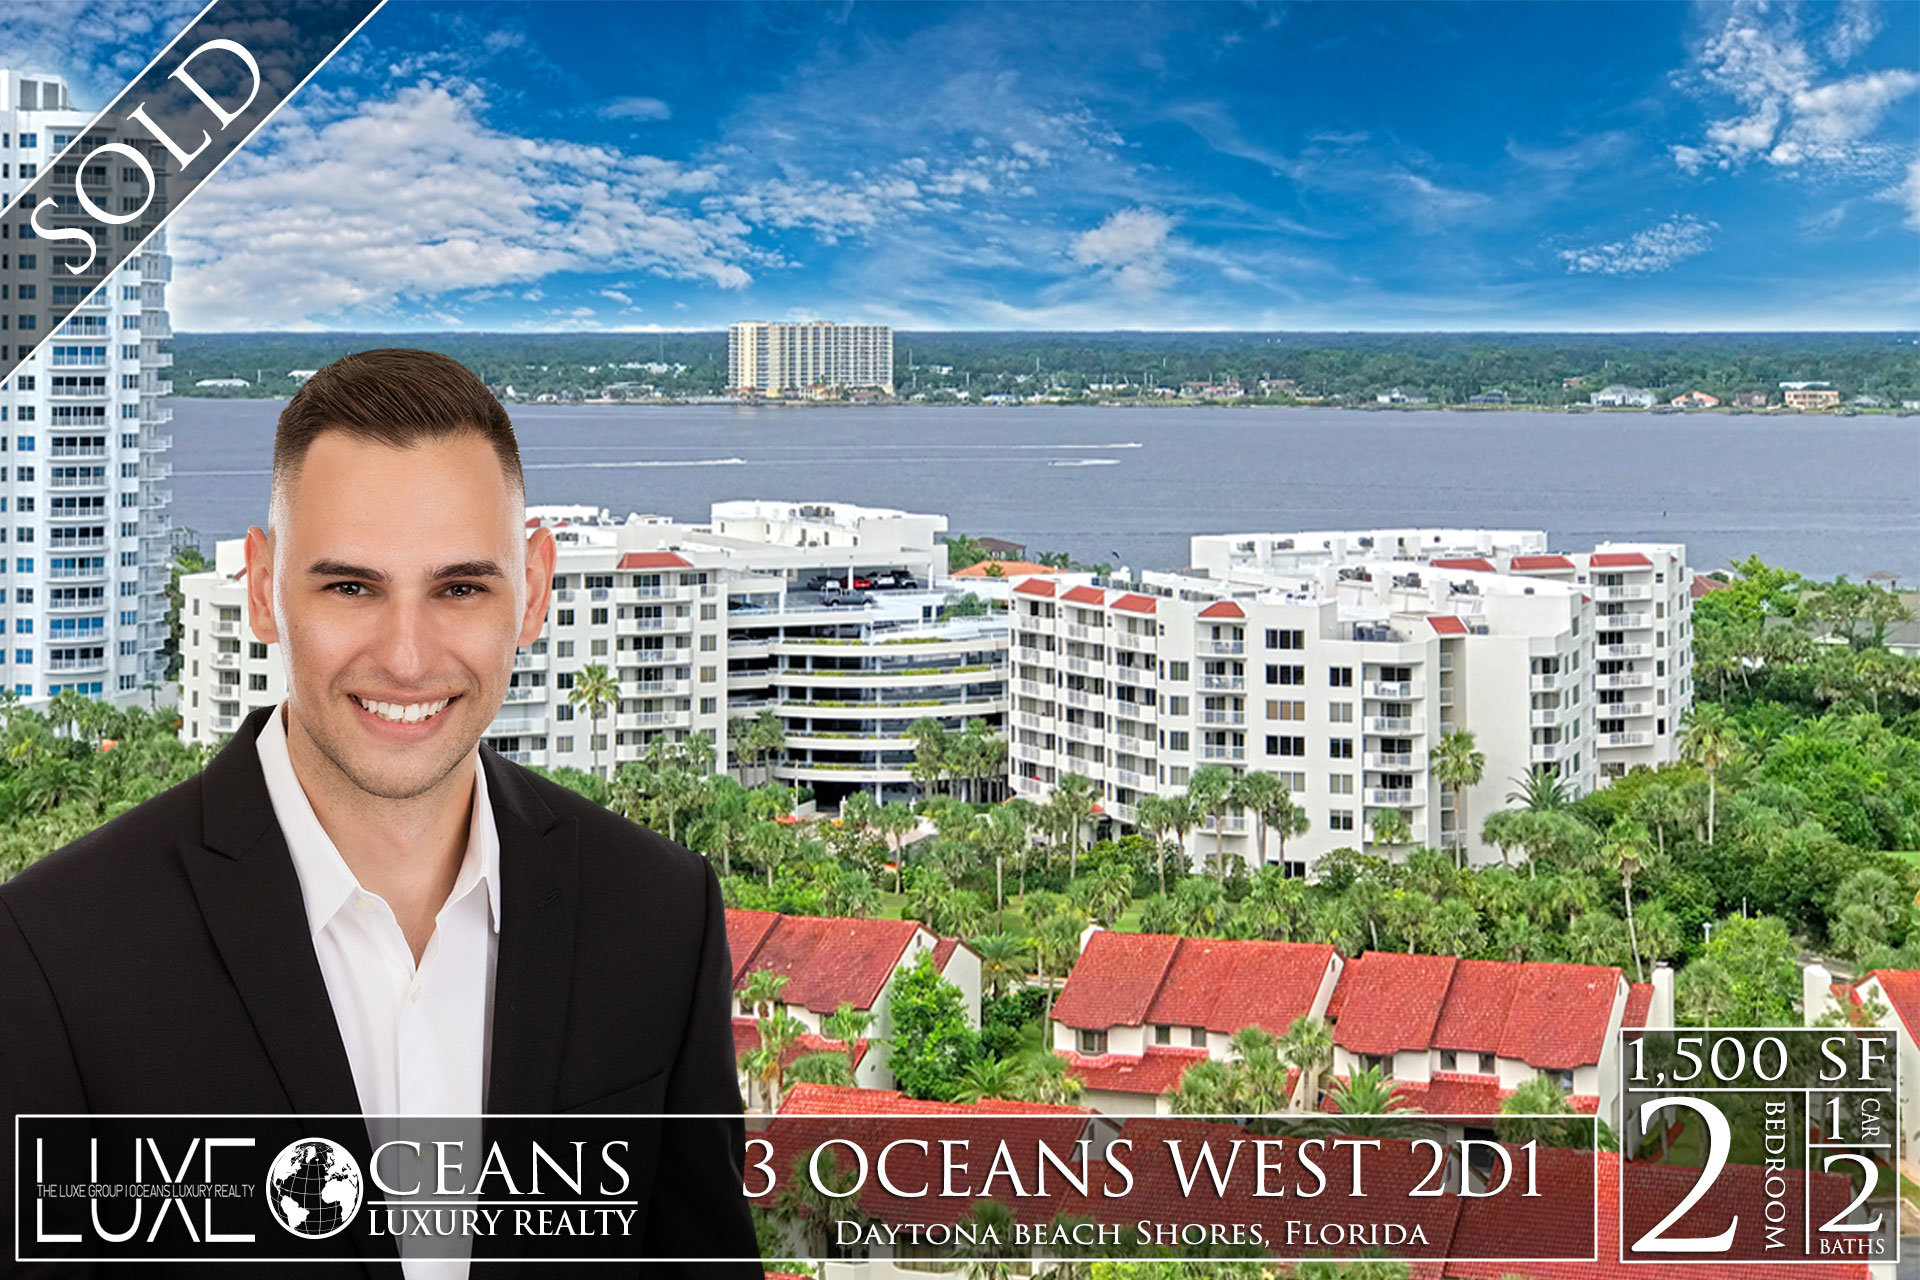 Cloverleaf South Condos For Sale Oceanfront Real Estate at 3 Oceans West Blvd Daytona Beach Shores, FL Sold